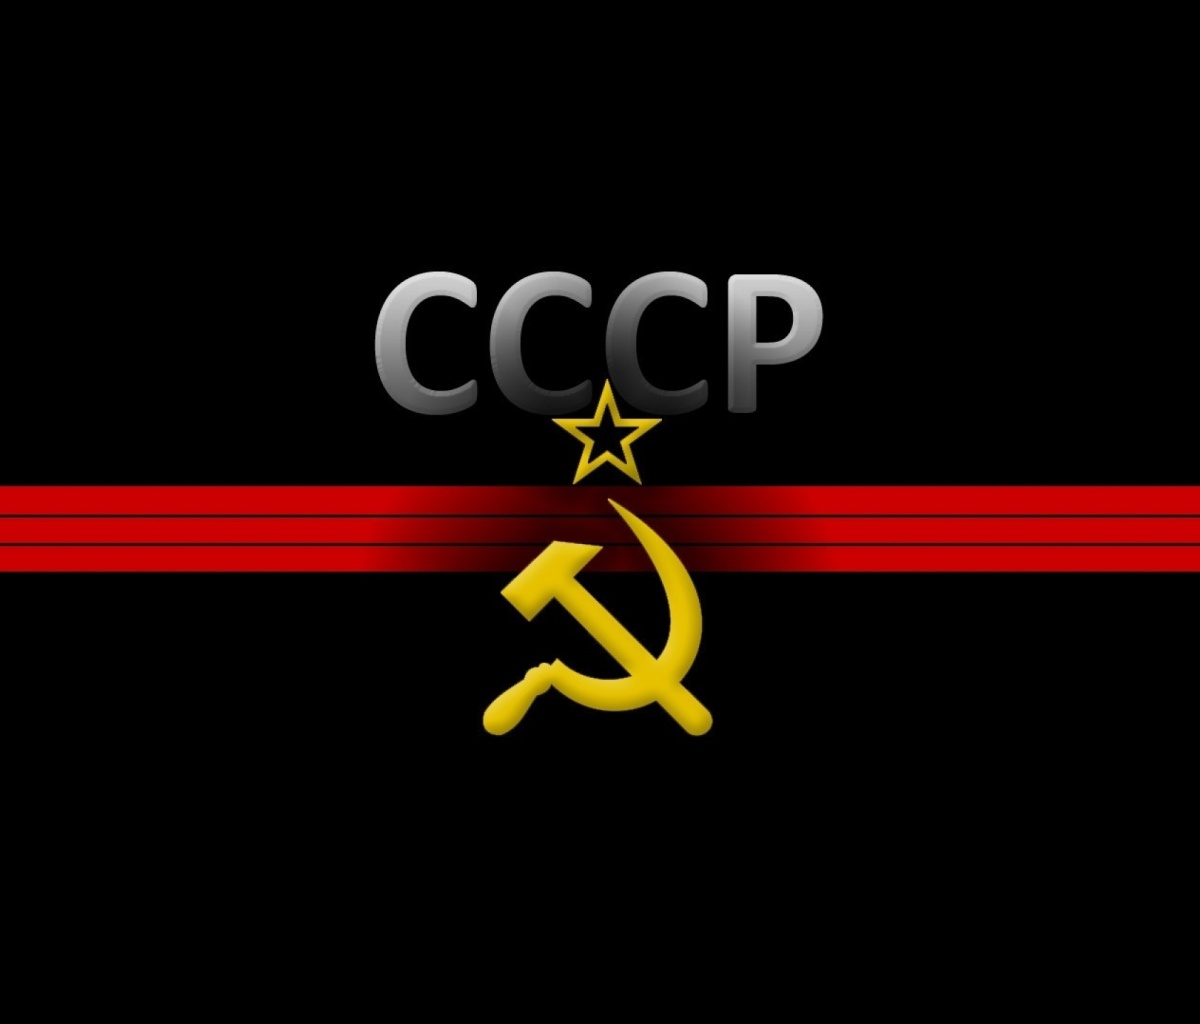 USSR and Communism Symbol wallpaper 1200x1024